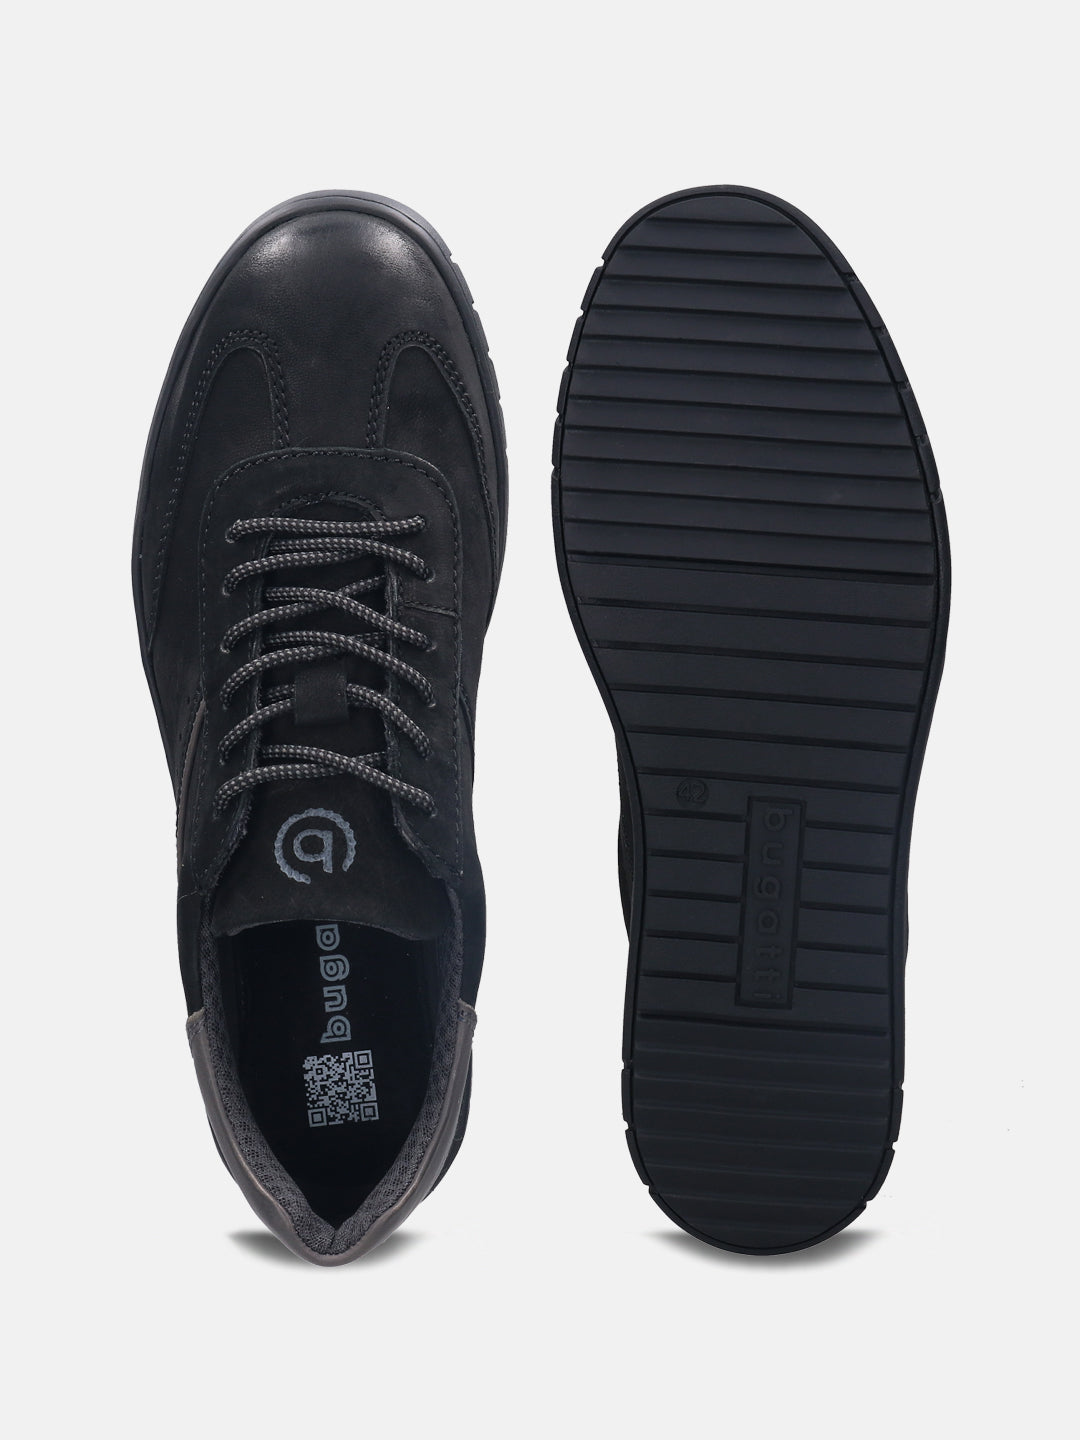 Ocean Black Sneakers - Bugatti Shoes – bugatti Shoes India